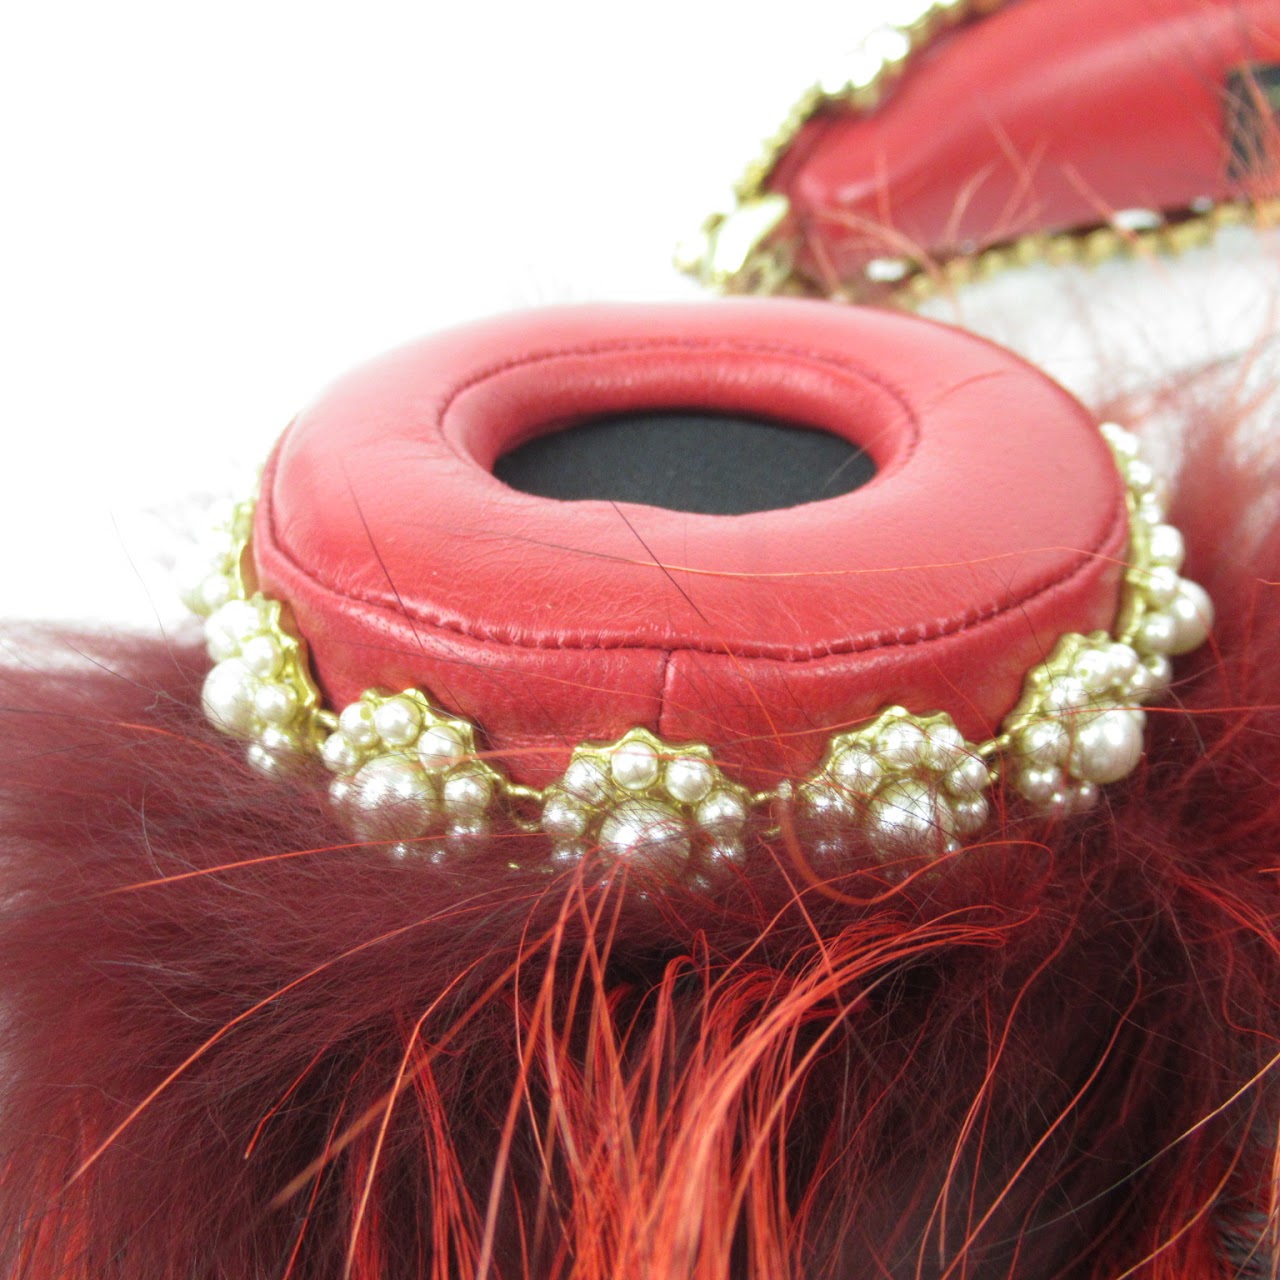 Dolce & Gabbana X Frends Embellished Headphones #1